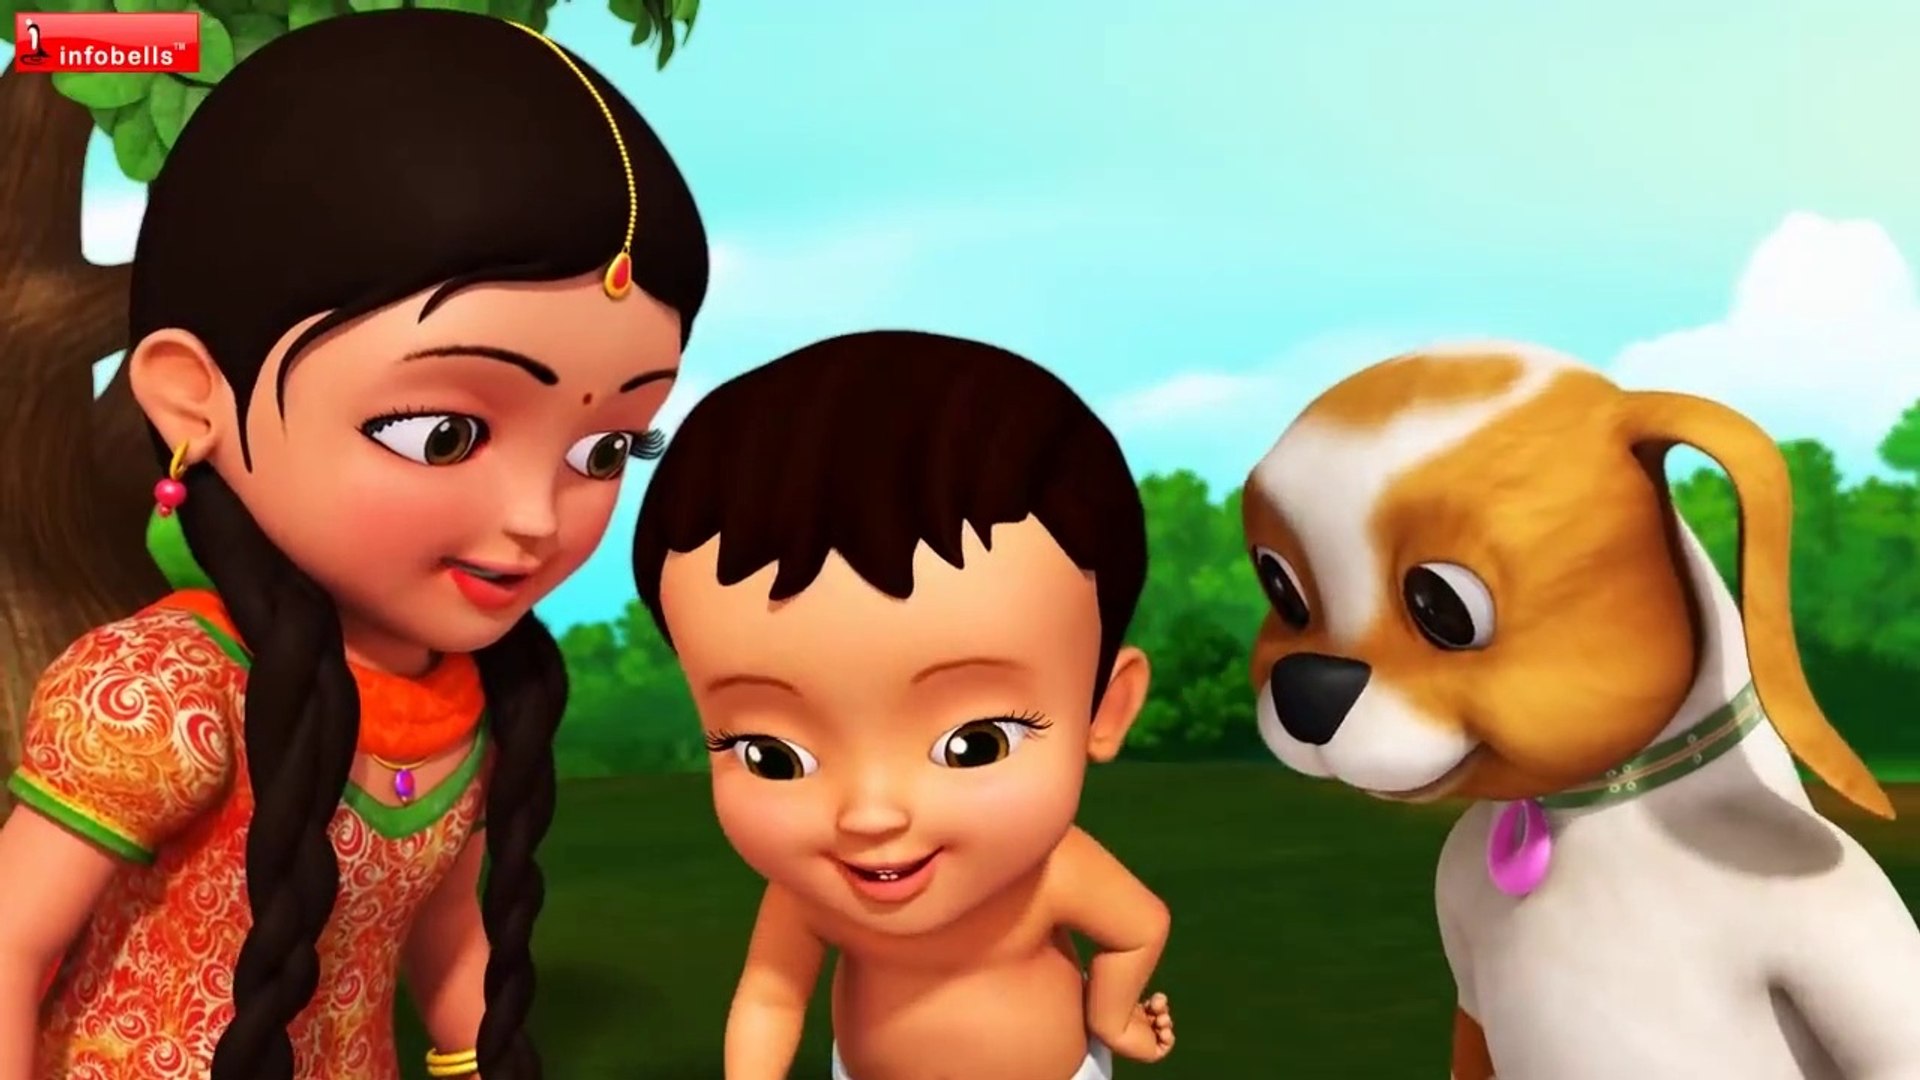 Bandar Mama Aur Jhoola and much more - Hindi Rhymes for Children - Infobells  - video Dailymotion